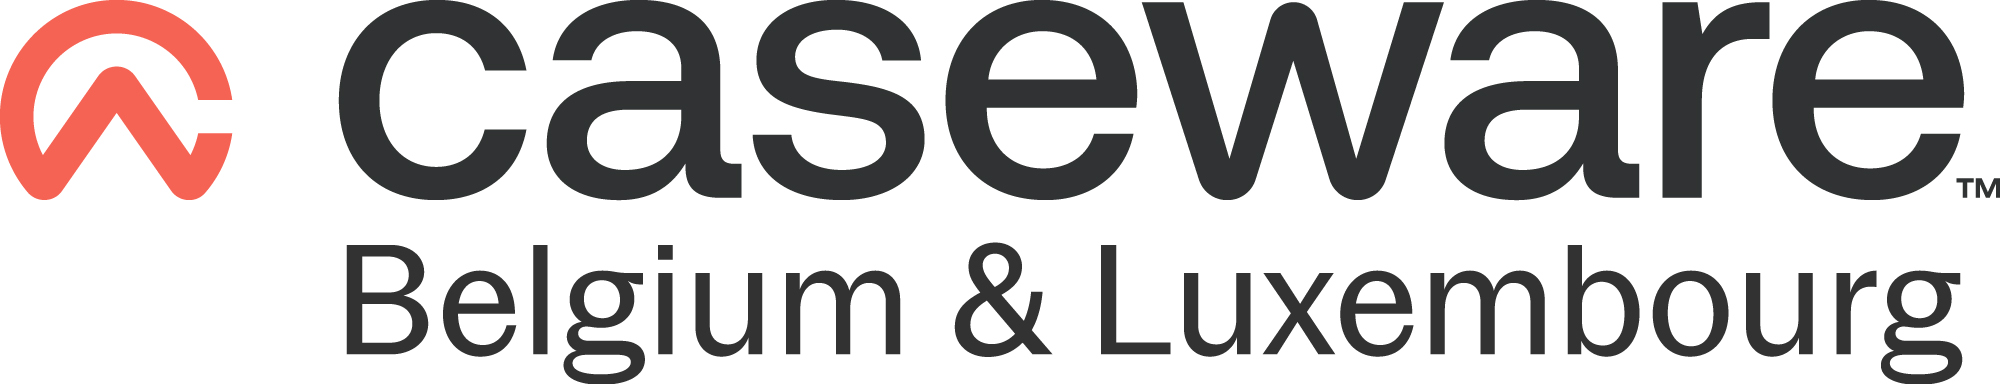 Caseware Belgium & Luxembourg